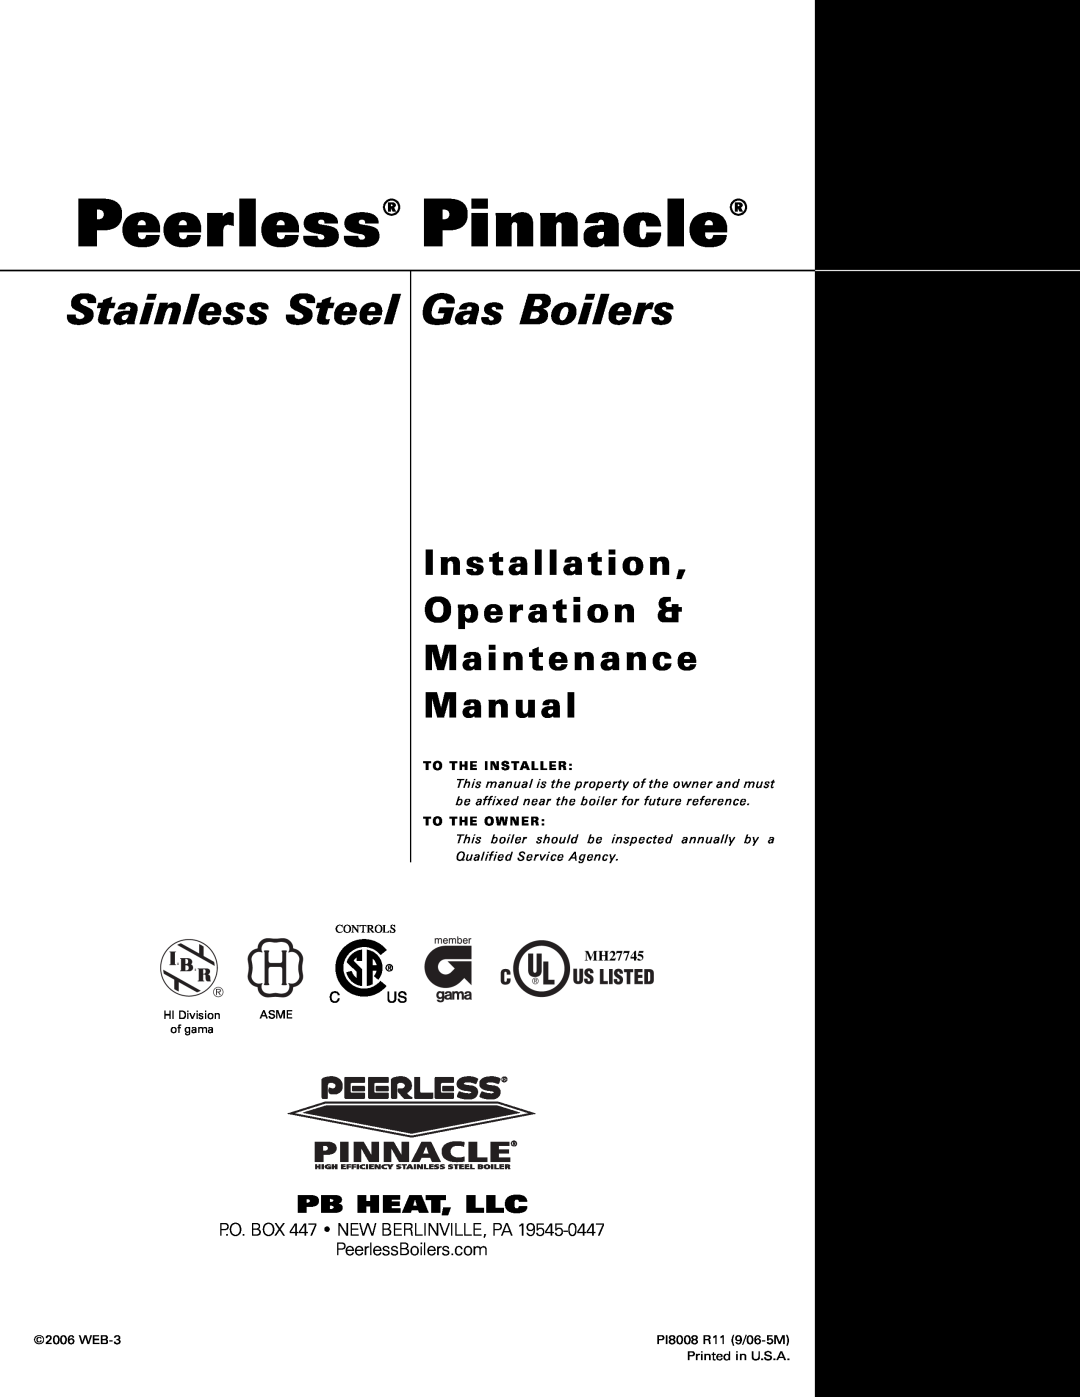 PB Heat Peerless Pinnacle, Stainless Steel Gas Boilers, Installation Operation & Maintenance Manual, Pb Heat, Llc, Asme 